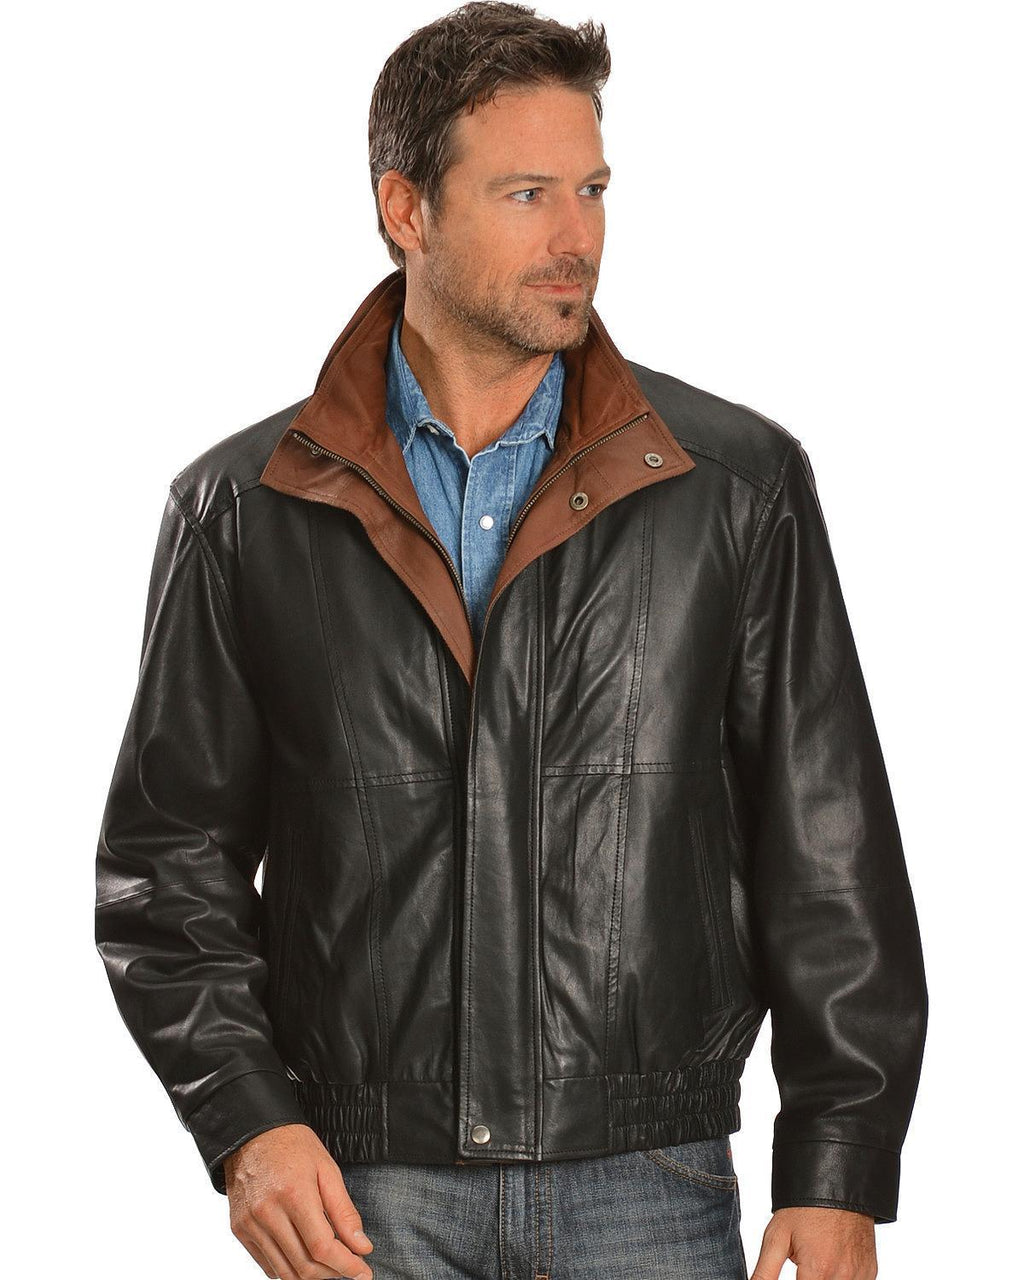 Men's Double Collar Leather Jacket